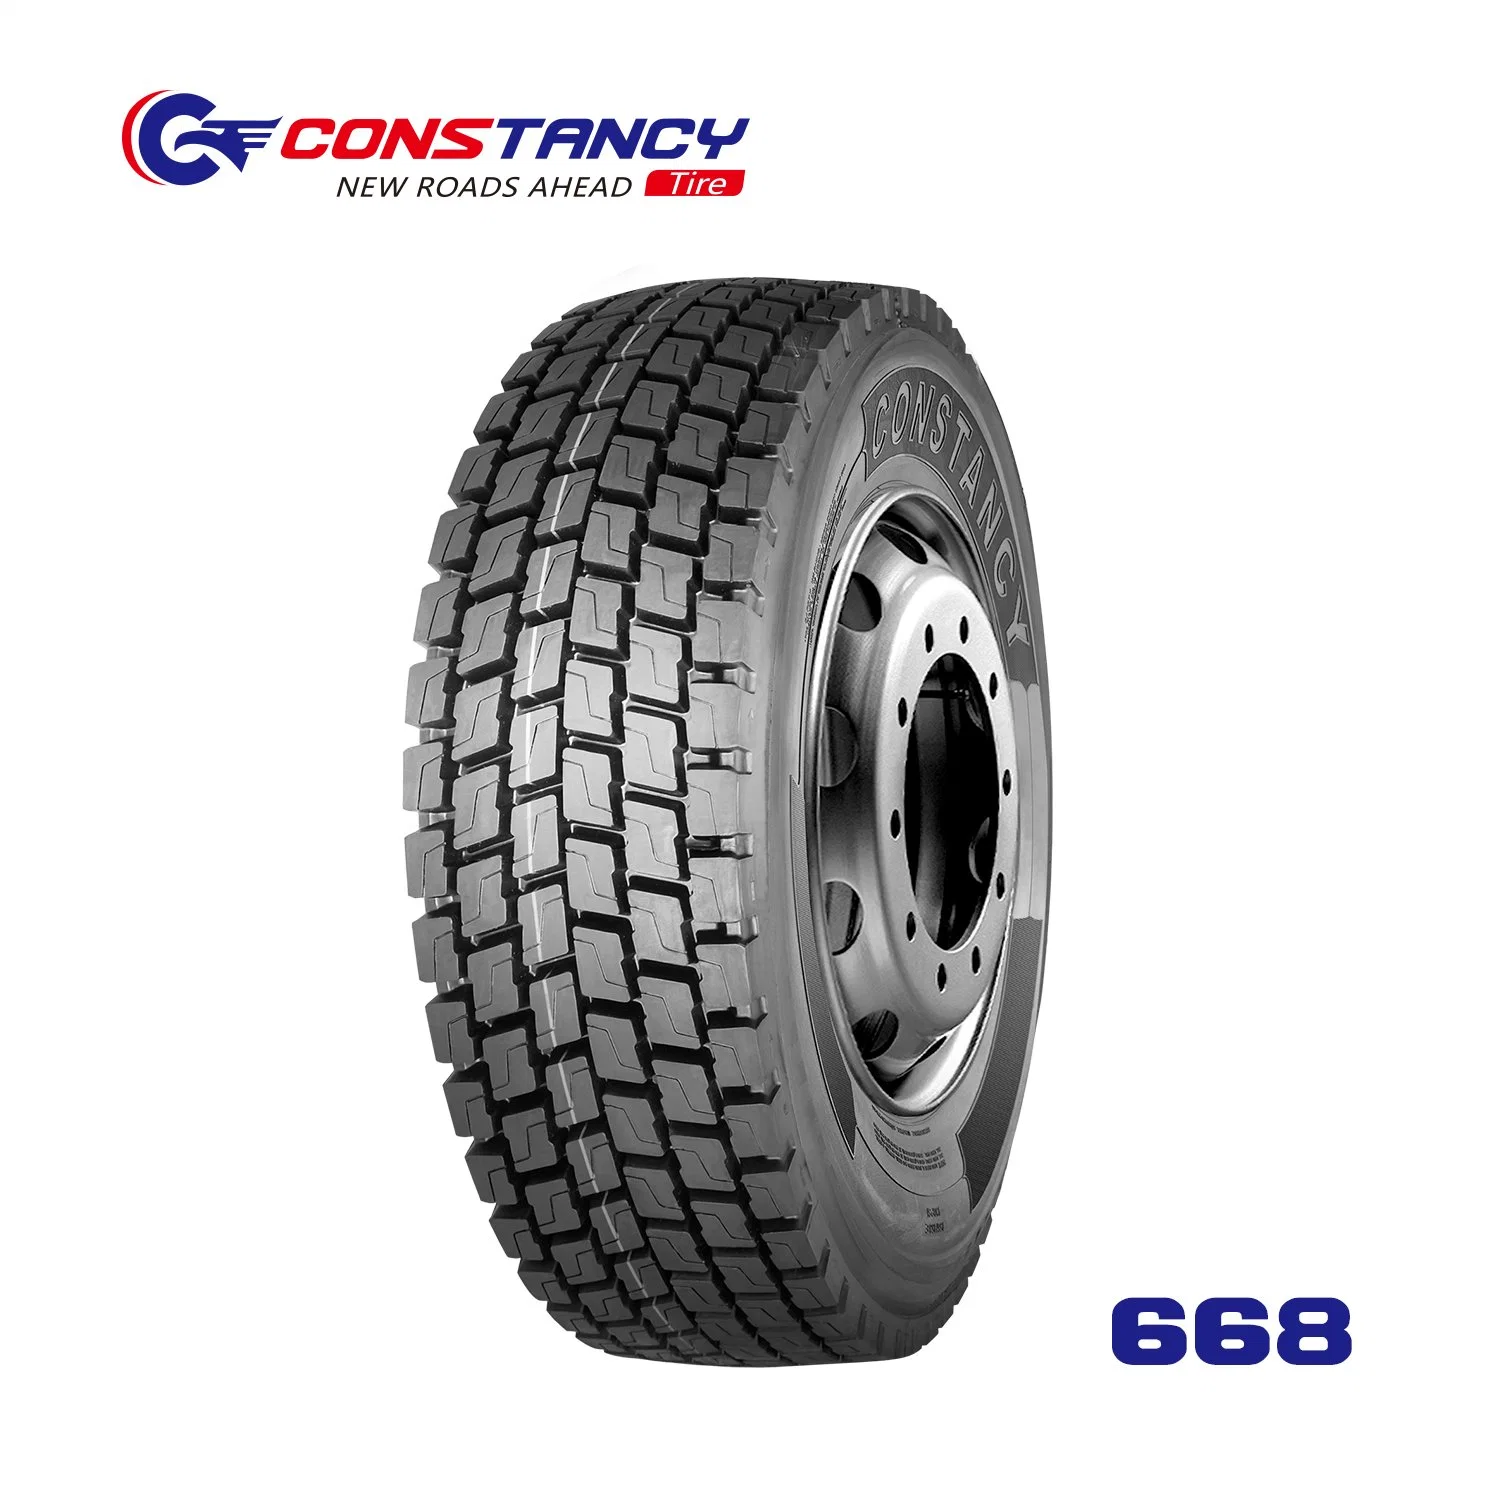 Constancy Carleo Brand China Manufacturer Truck Tire 295/80r22.5